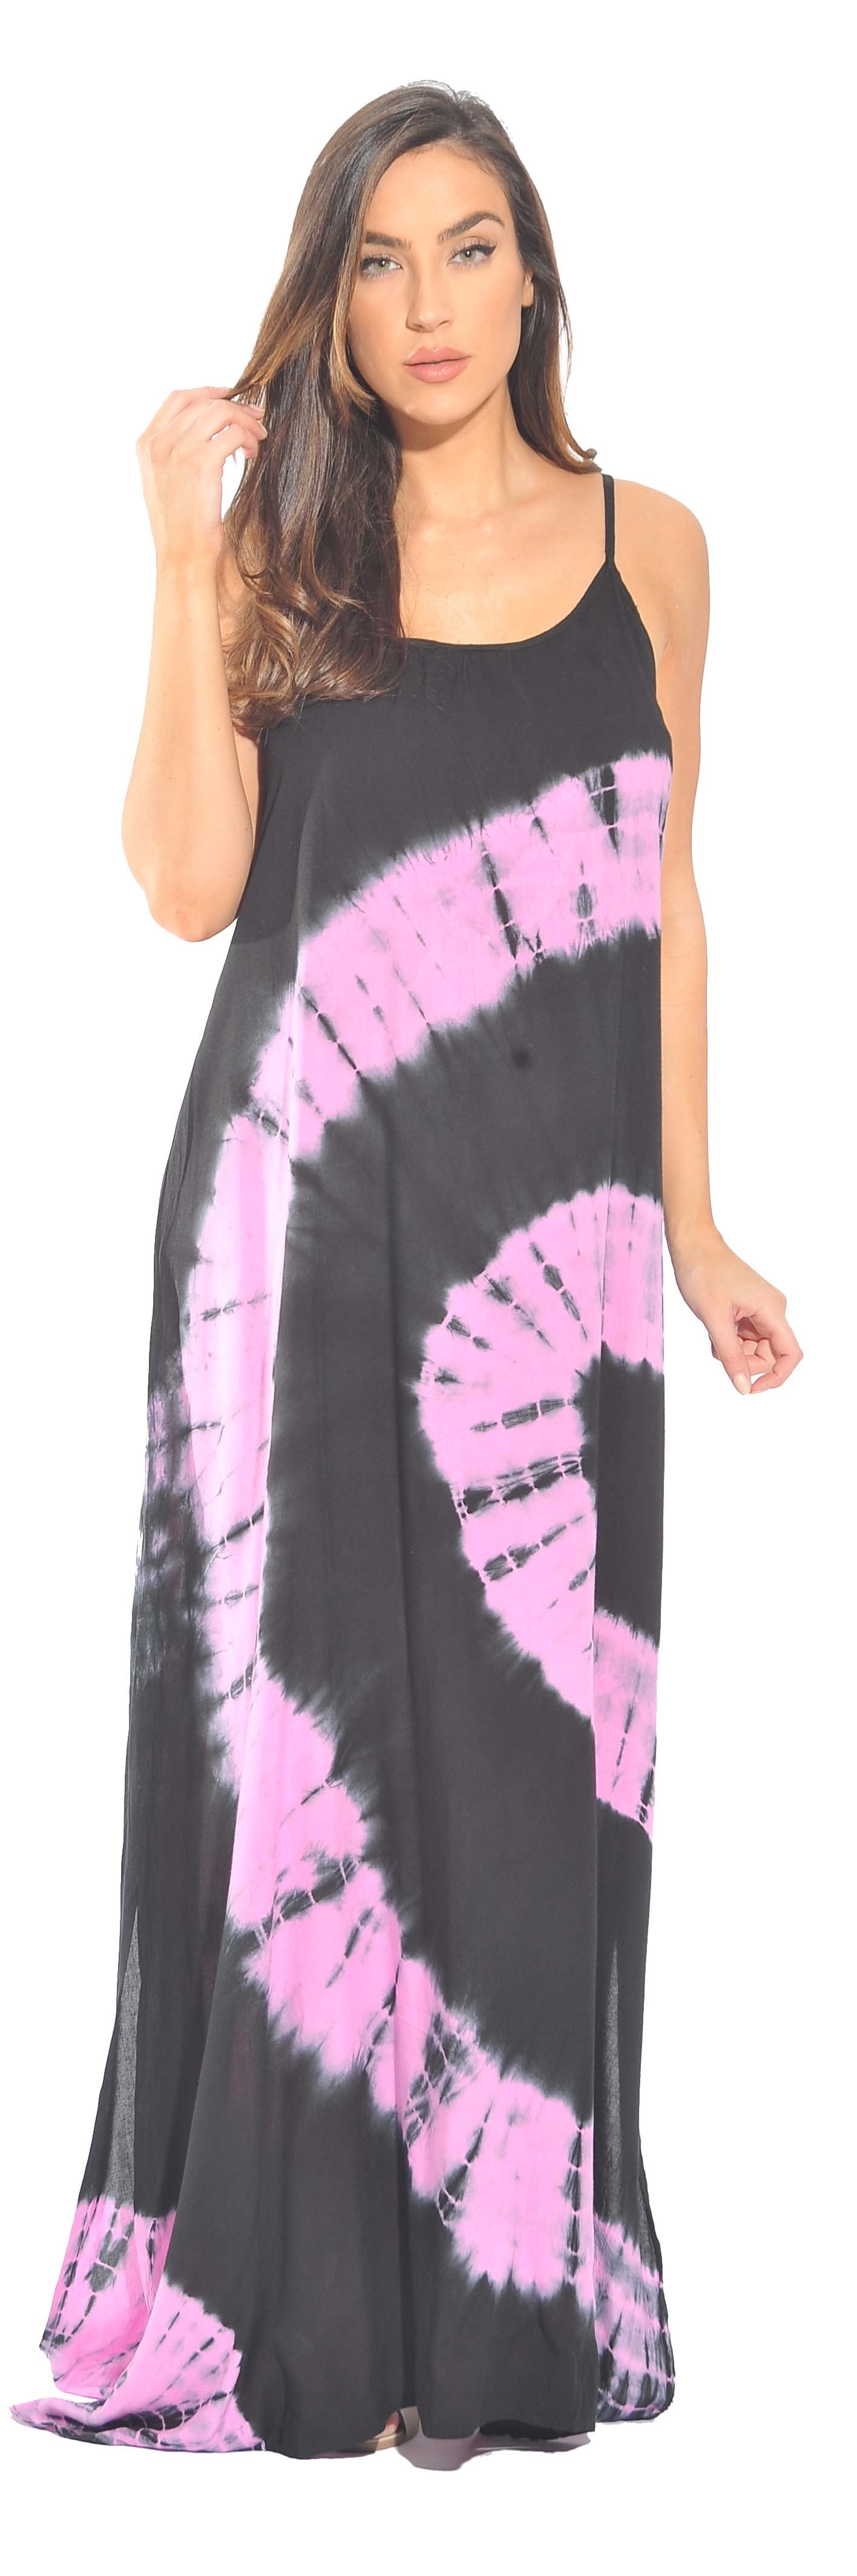 Riviera Sun Tie Dye Spaghetti Strap Maxi Dress (Black / Pink, 3X ...